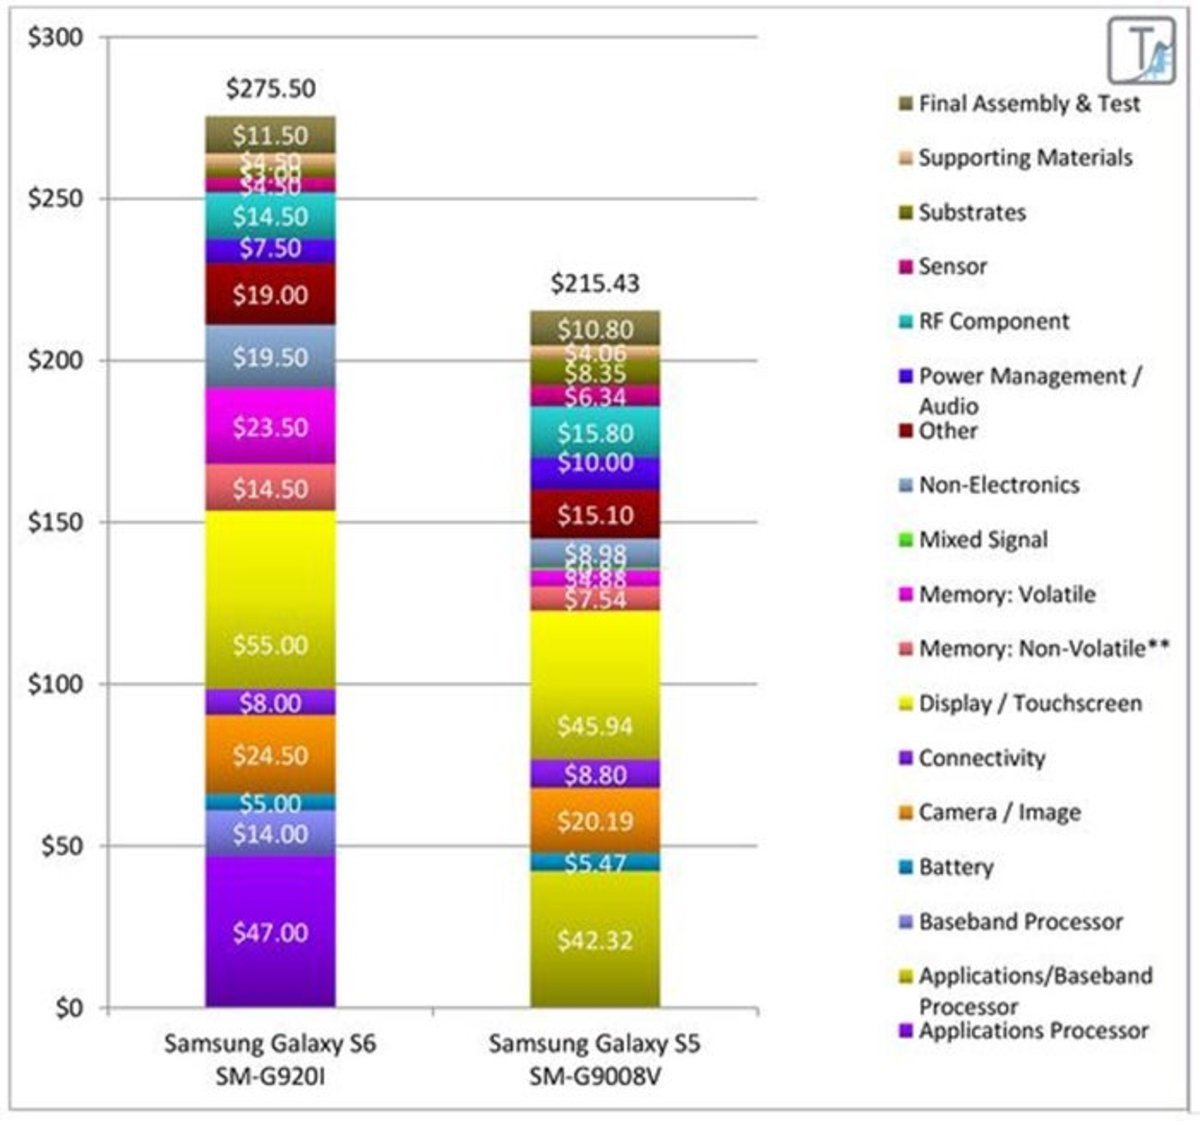 Coste fabricacion Samsung Galaxy S6 vs S5